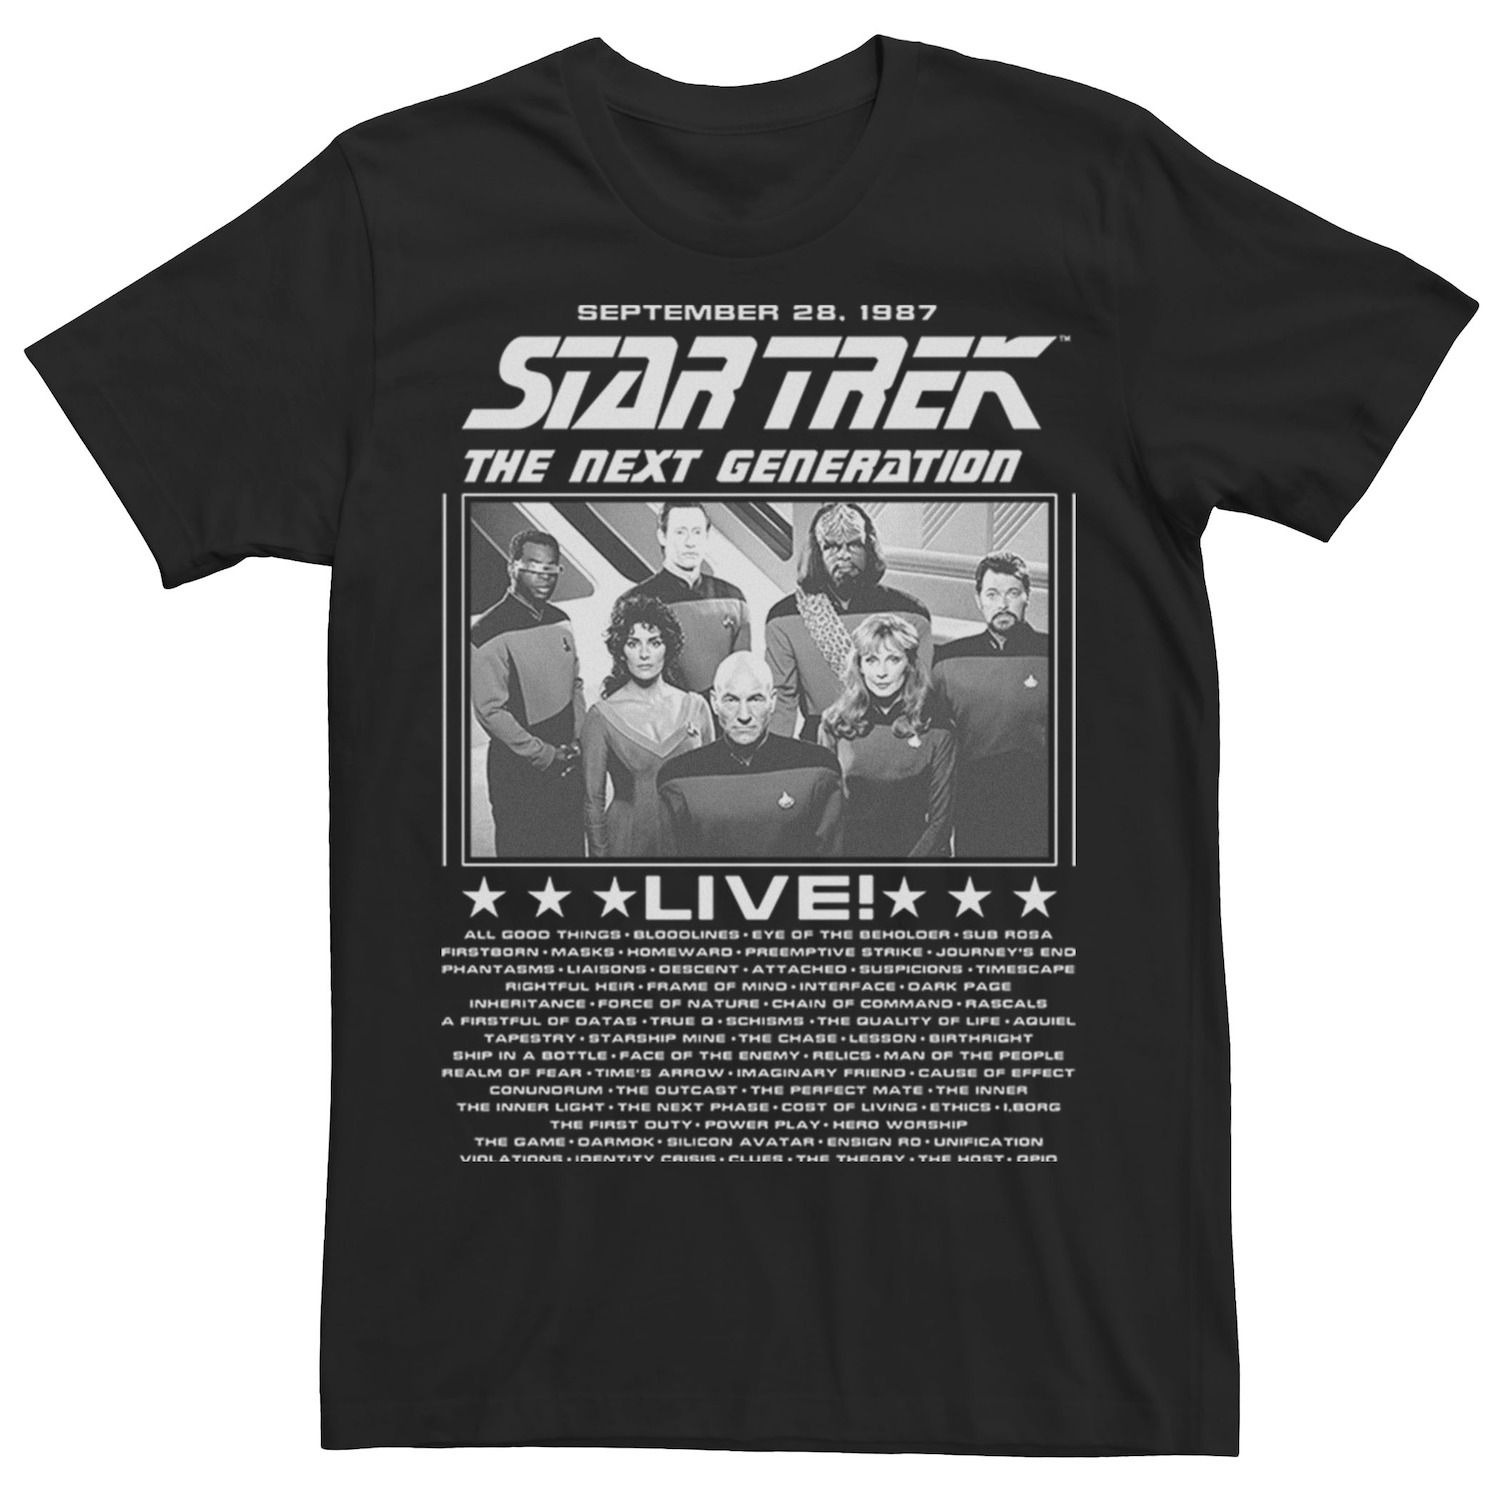 Мужская футболка с плакатом Star Trek The Next Generation Live Licensed Character фигурка reaction figure star trek the next generation – wave 1 – data 9 см